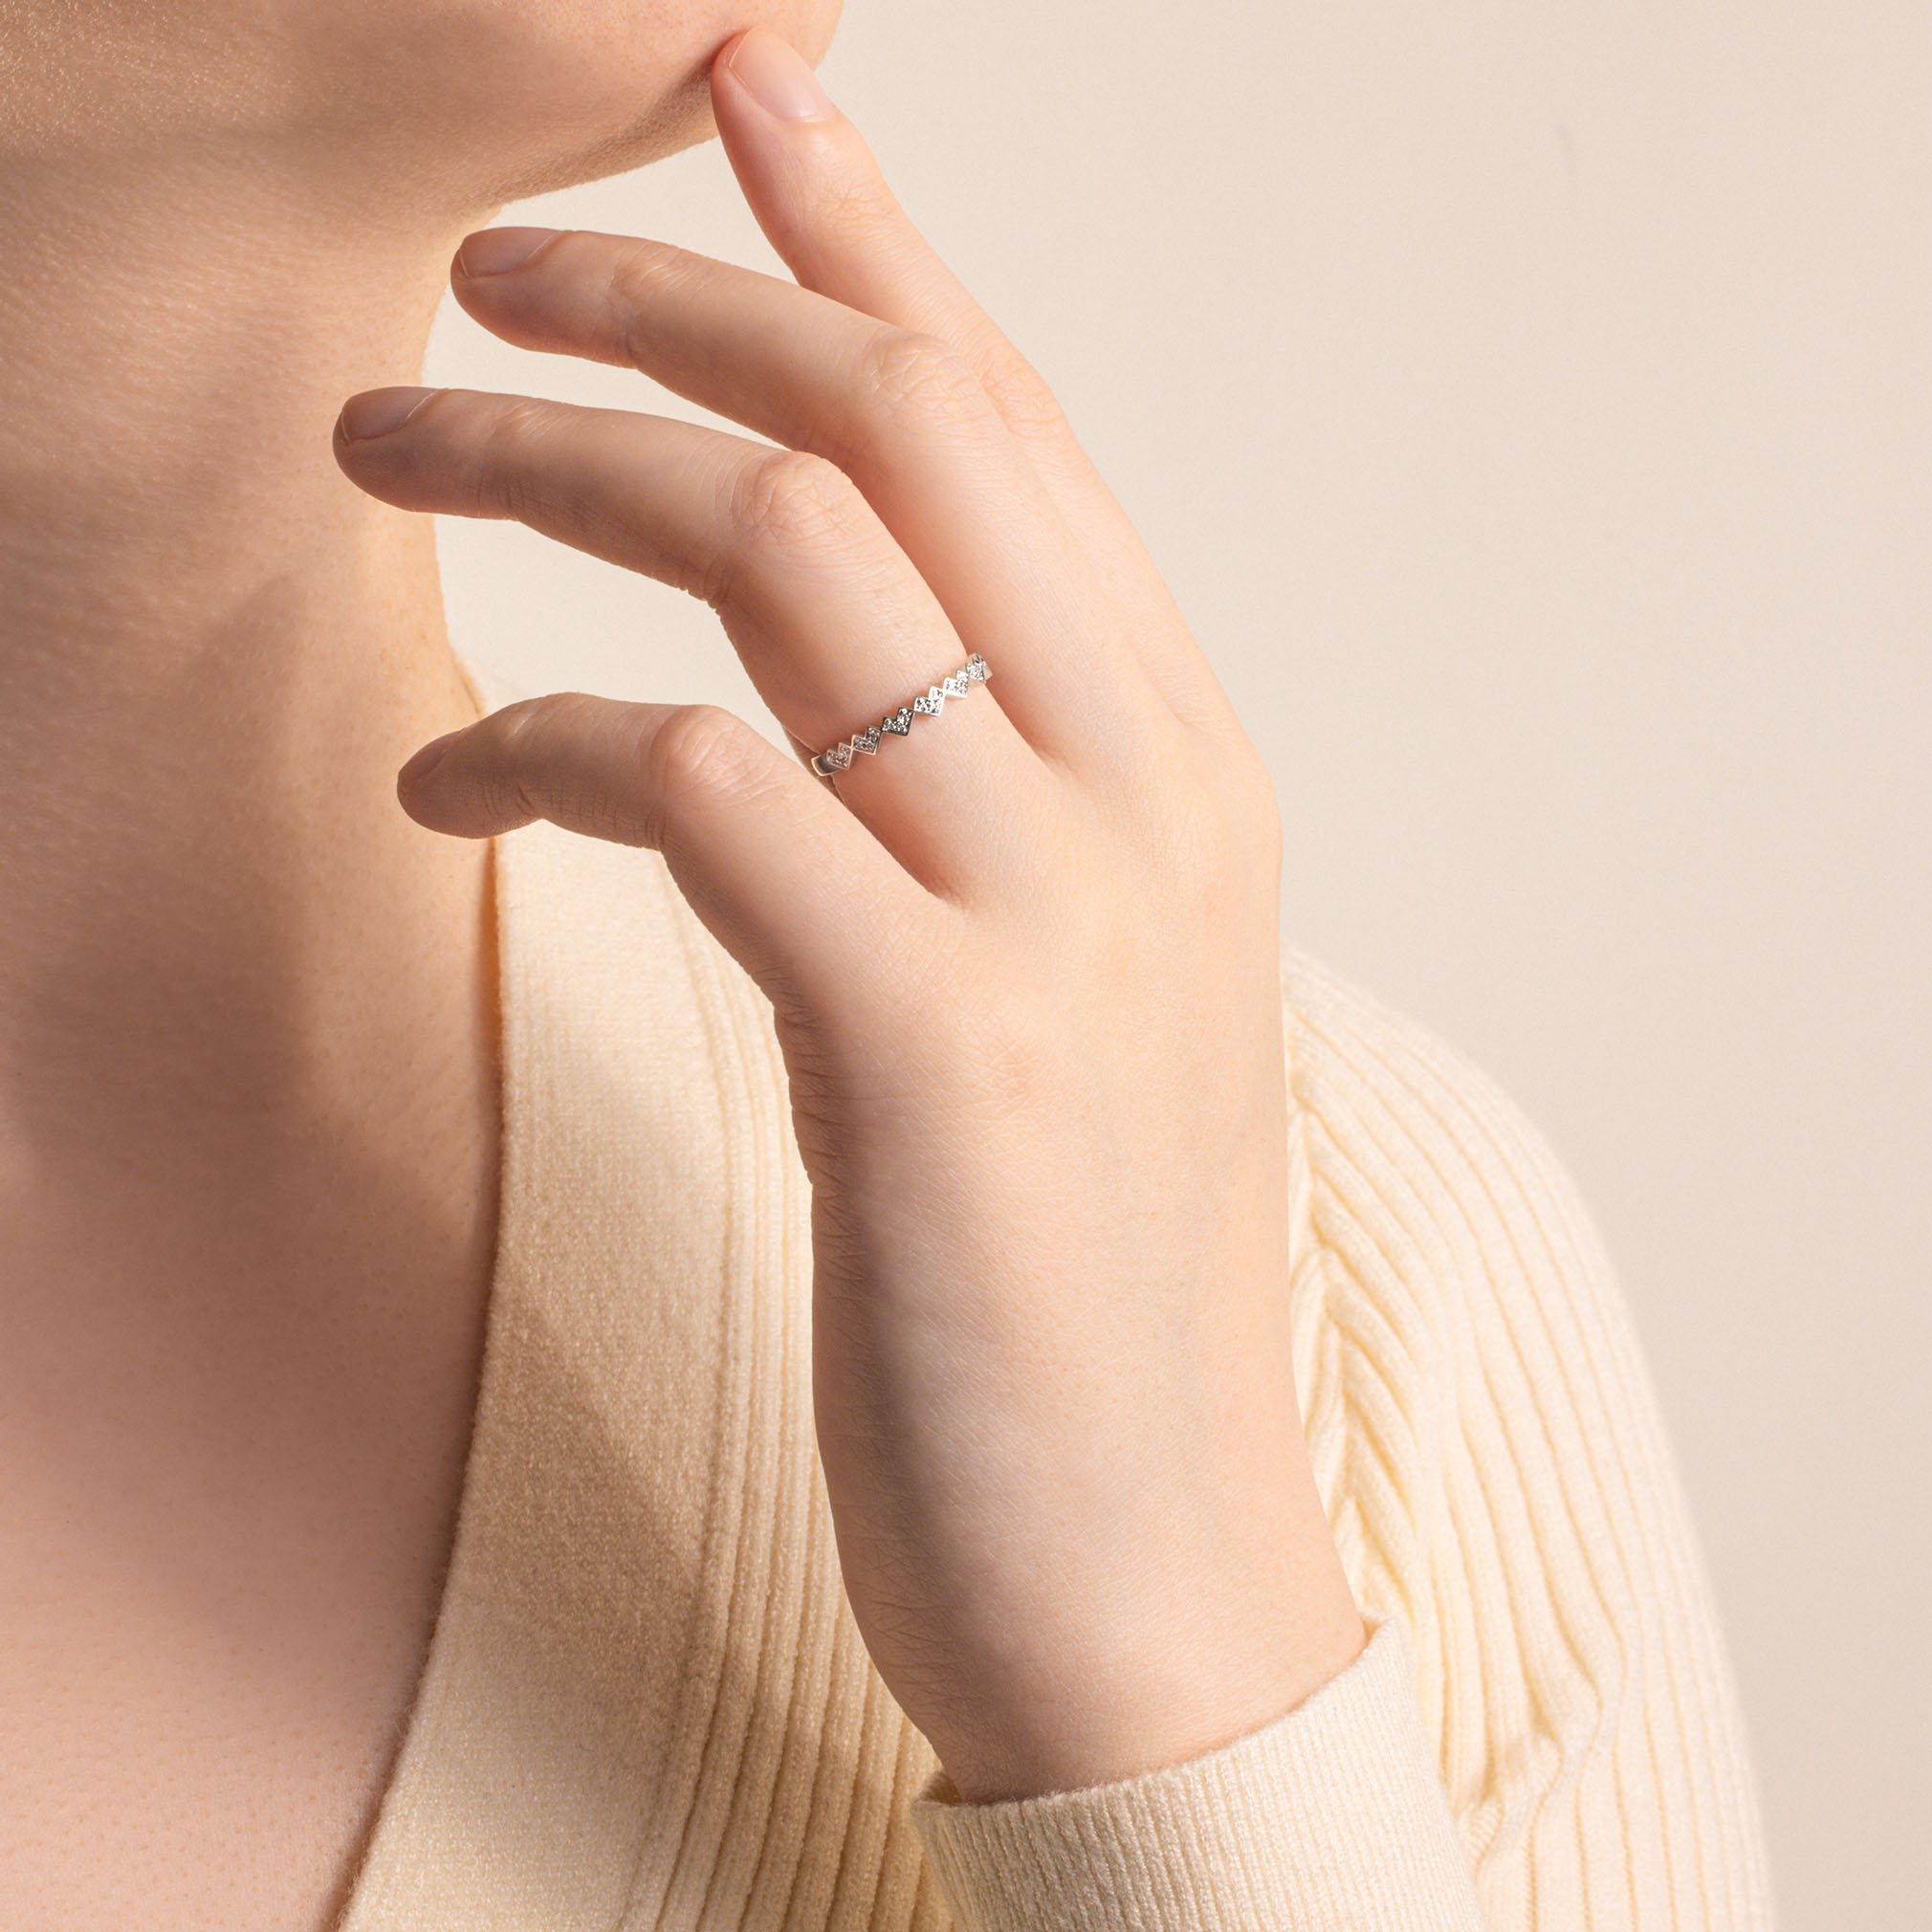 Darry Ring heart shaped diamond wedding ring on finger